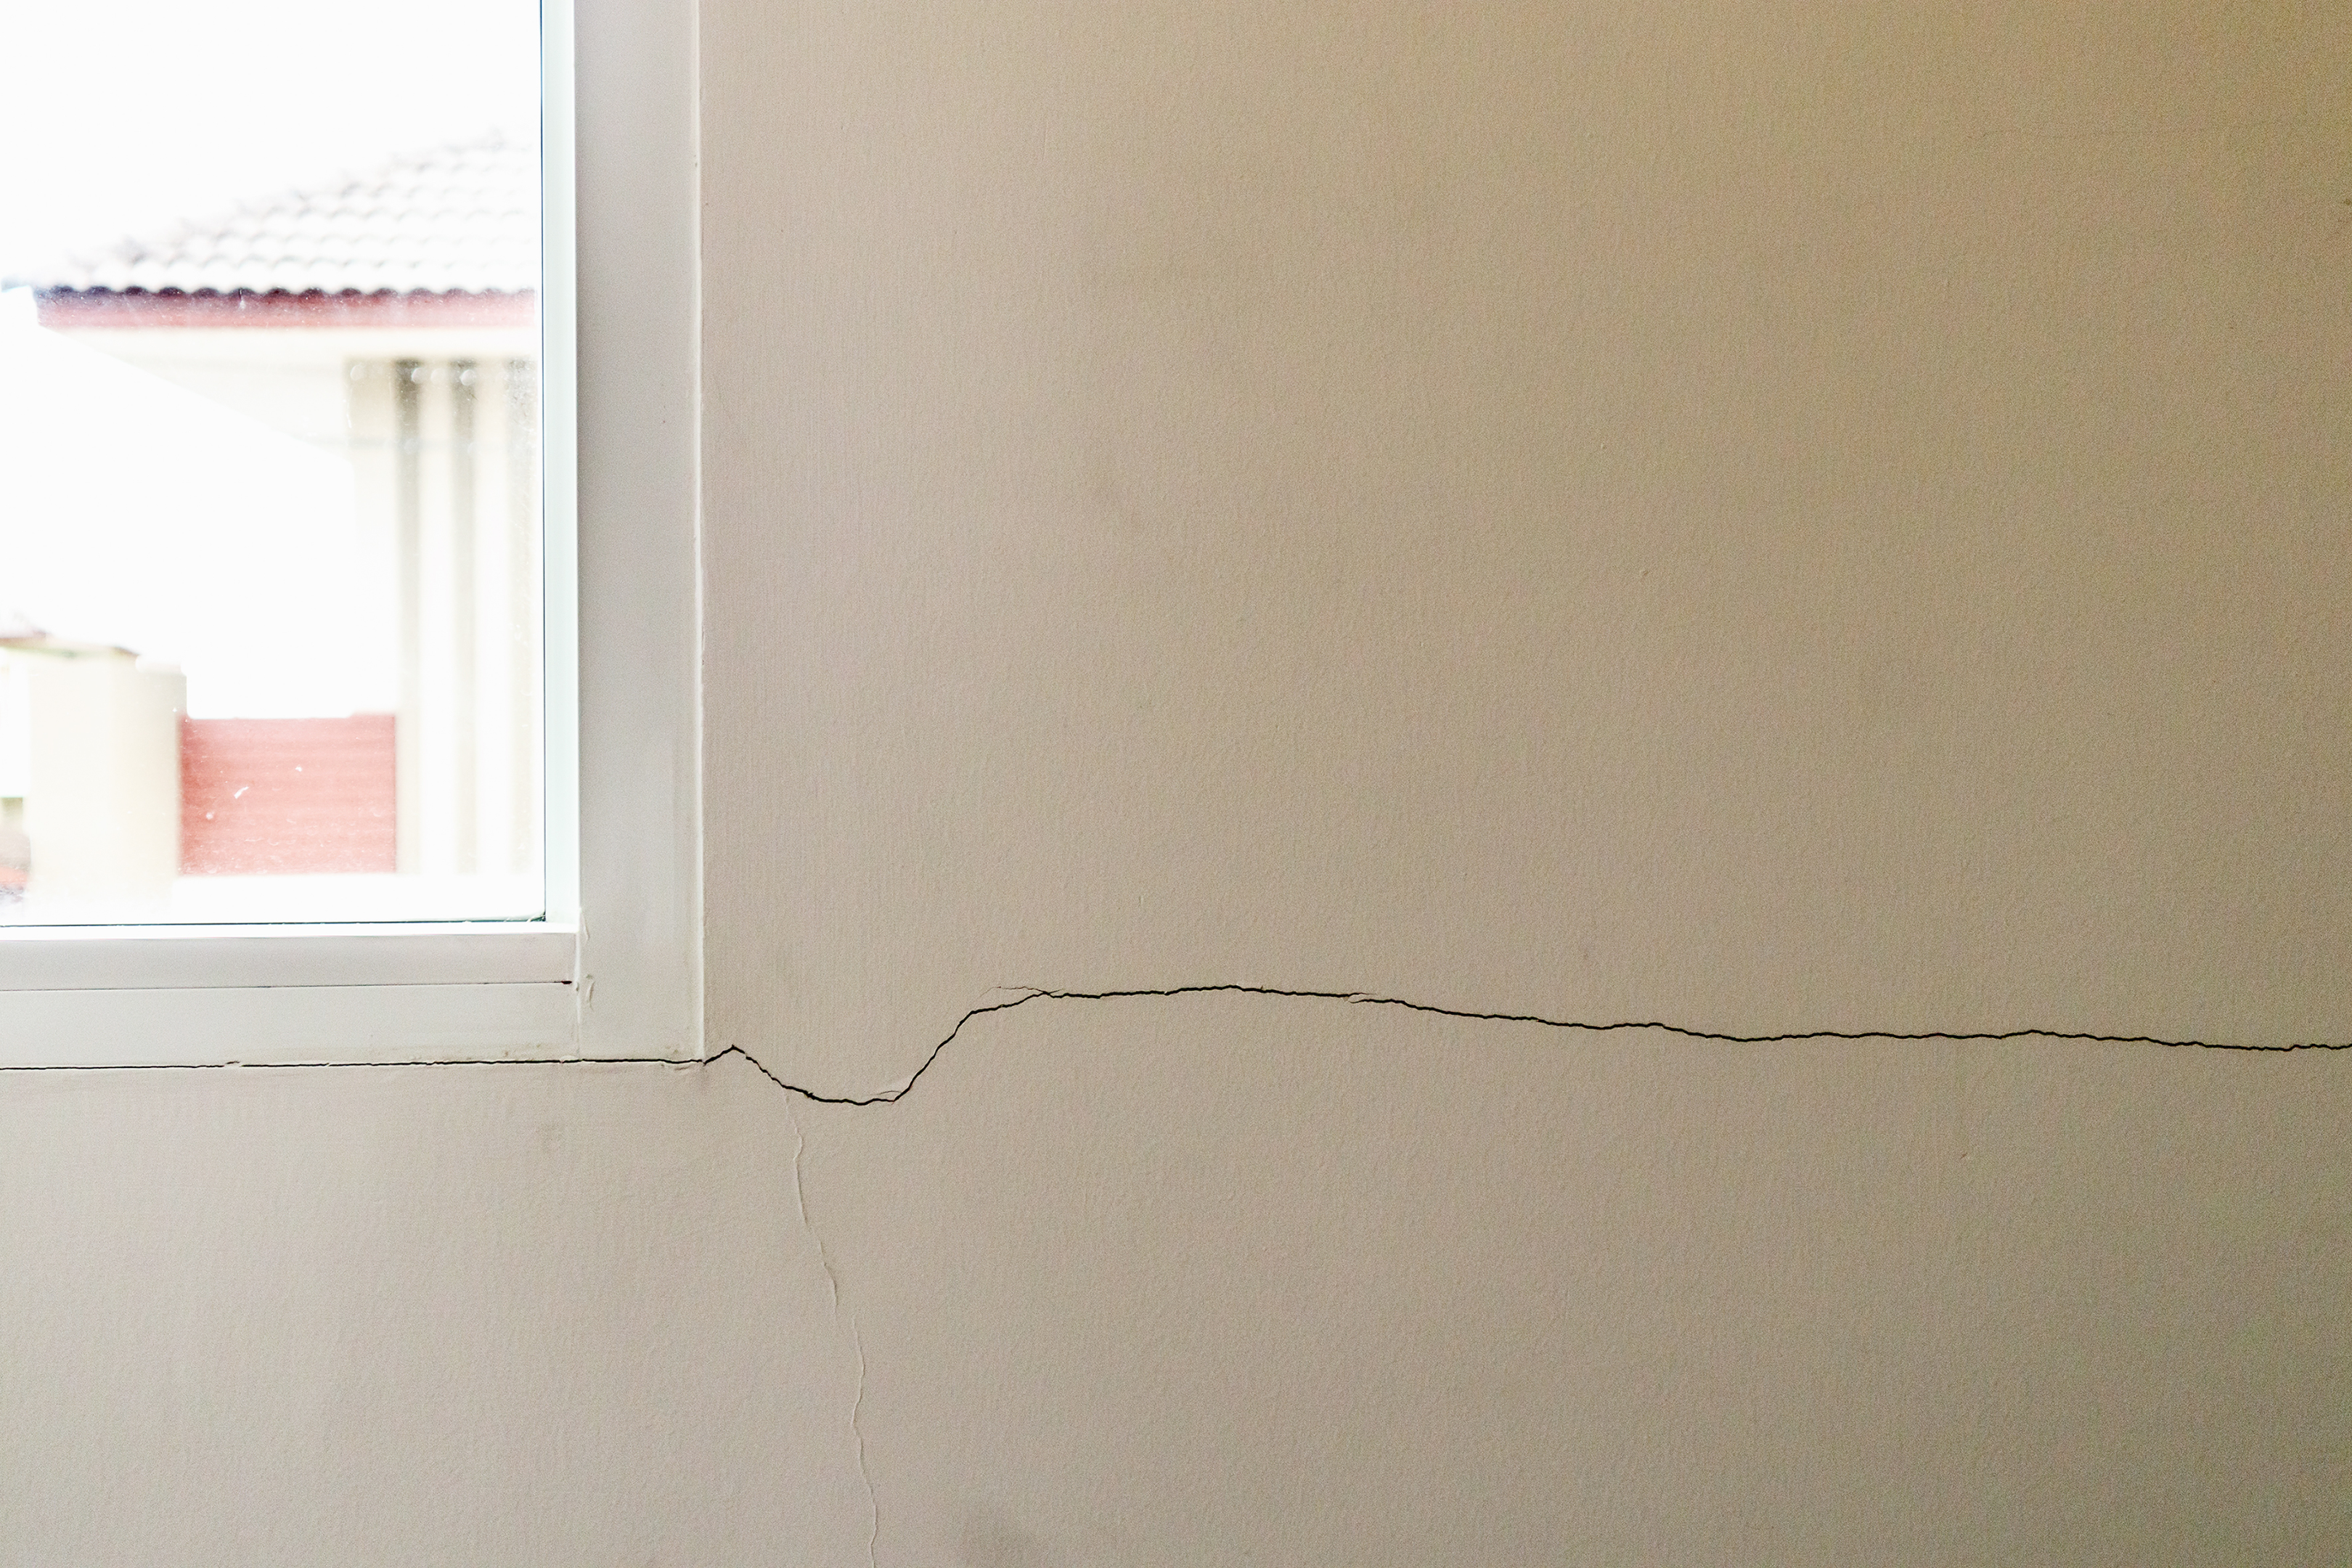 Crack in wall near window because of basement settlement